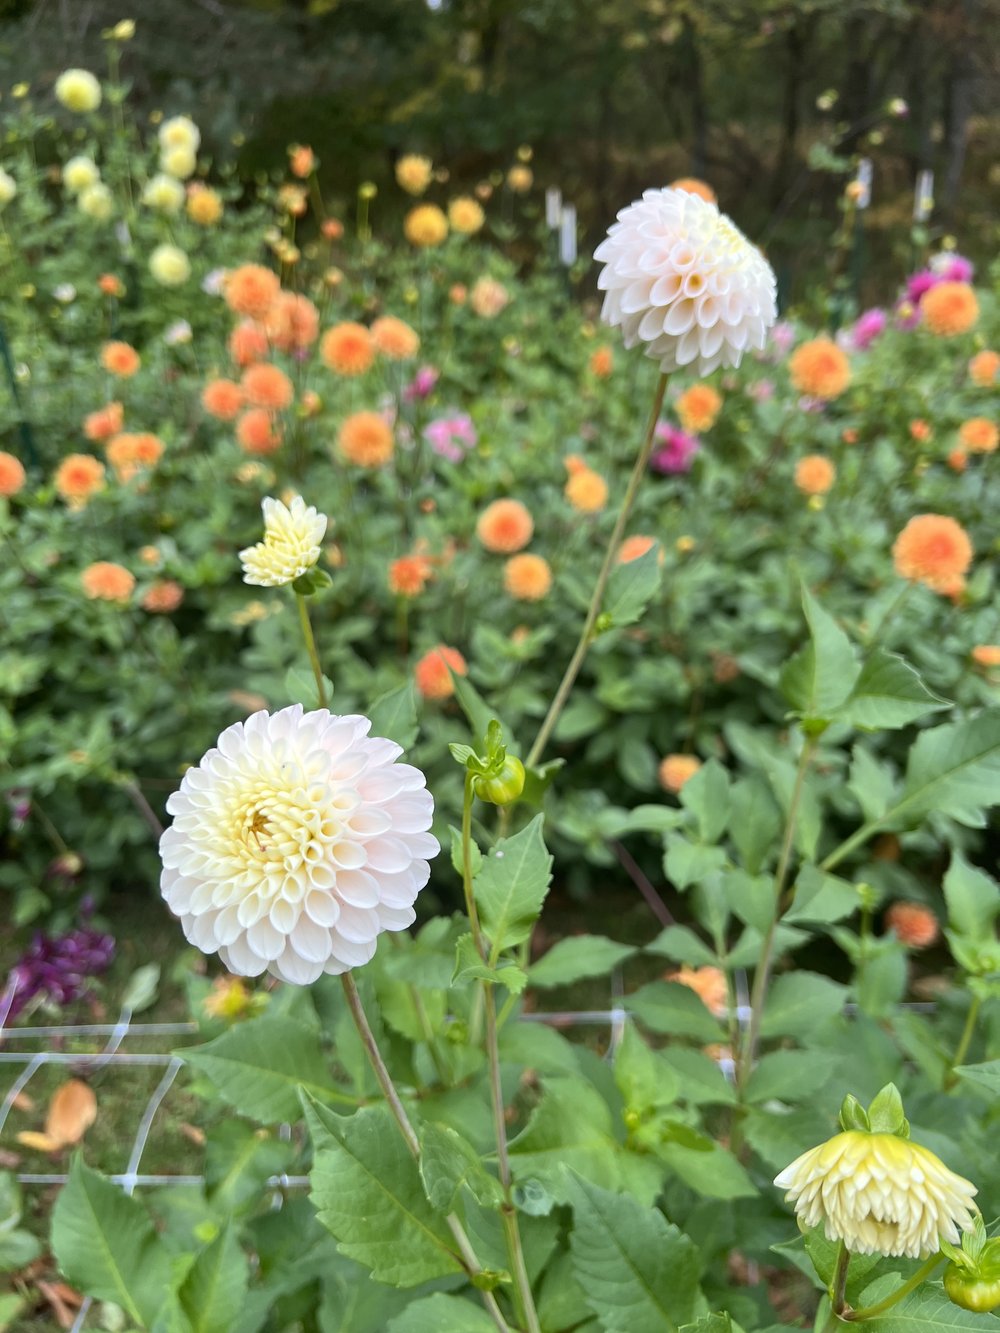 Farm Fresh local honey bee decor for the home – Backyard Dahlia